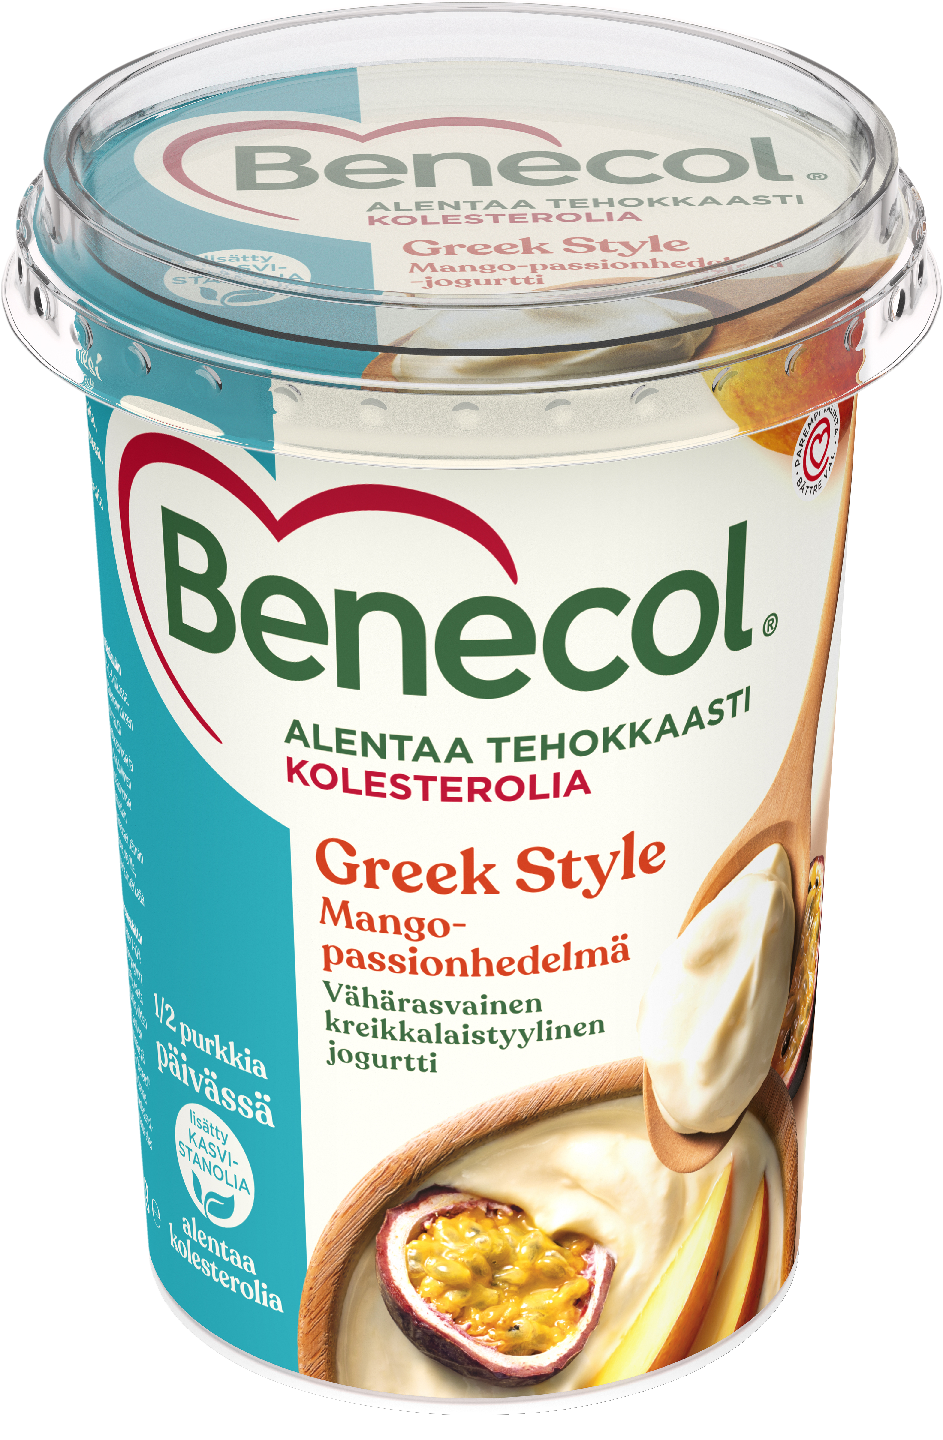 Benecol mango-passionhedelmä kreikkalaistyylinen jogurtti 450g